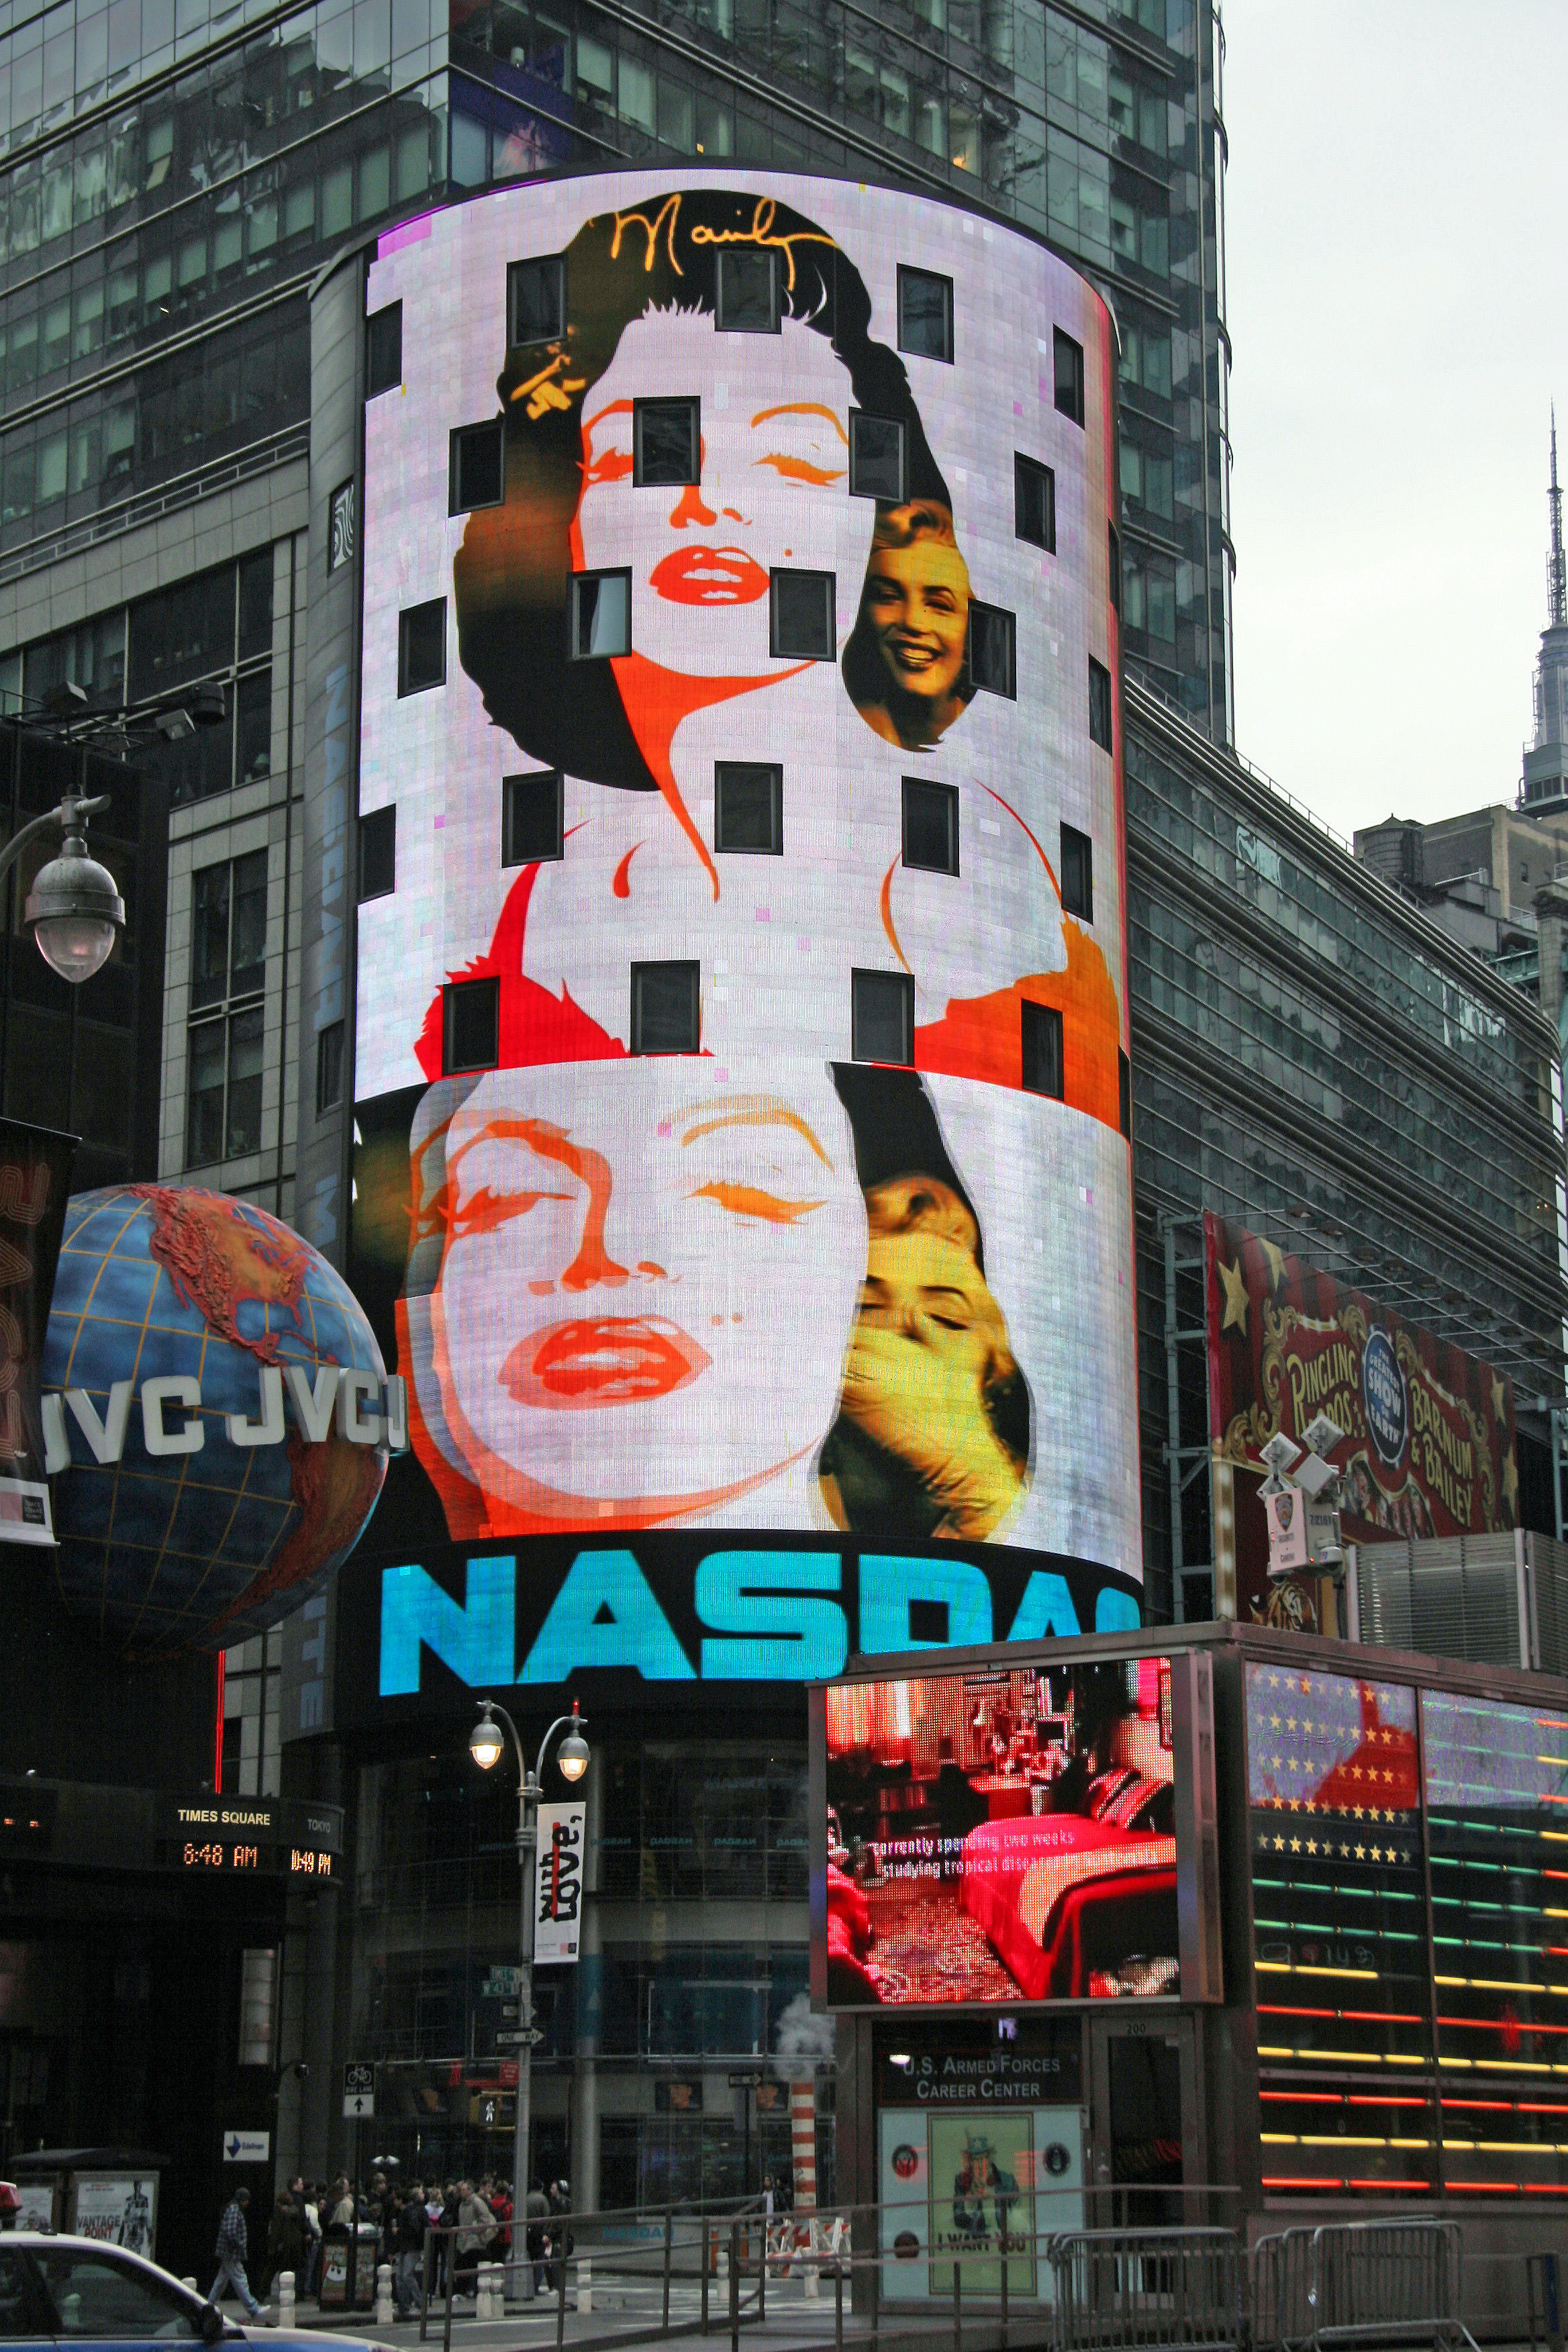 Times Square - NASDAQ Sign at 43rd Street photo - Hubert Steed photos ...